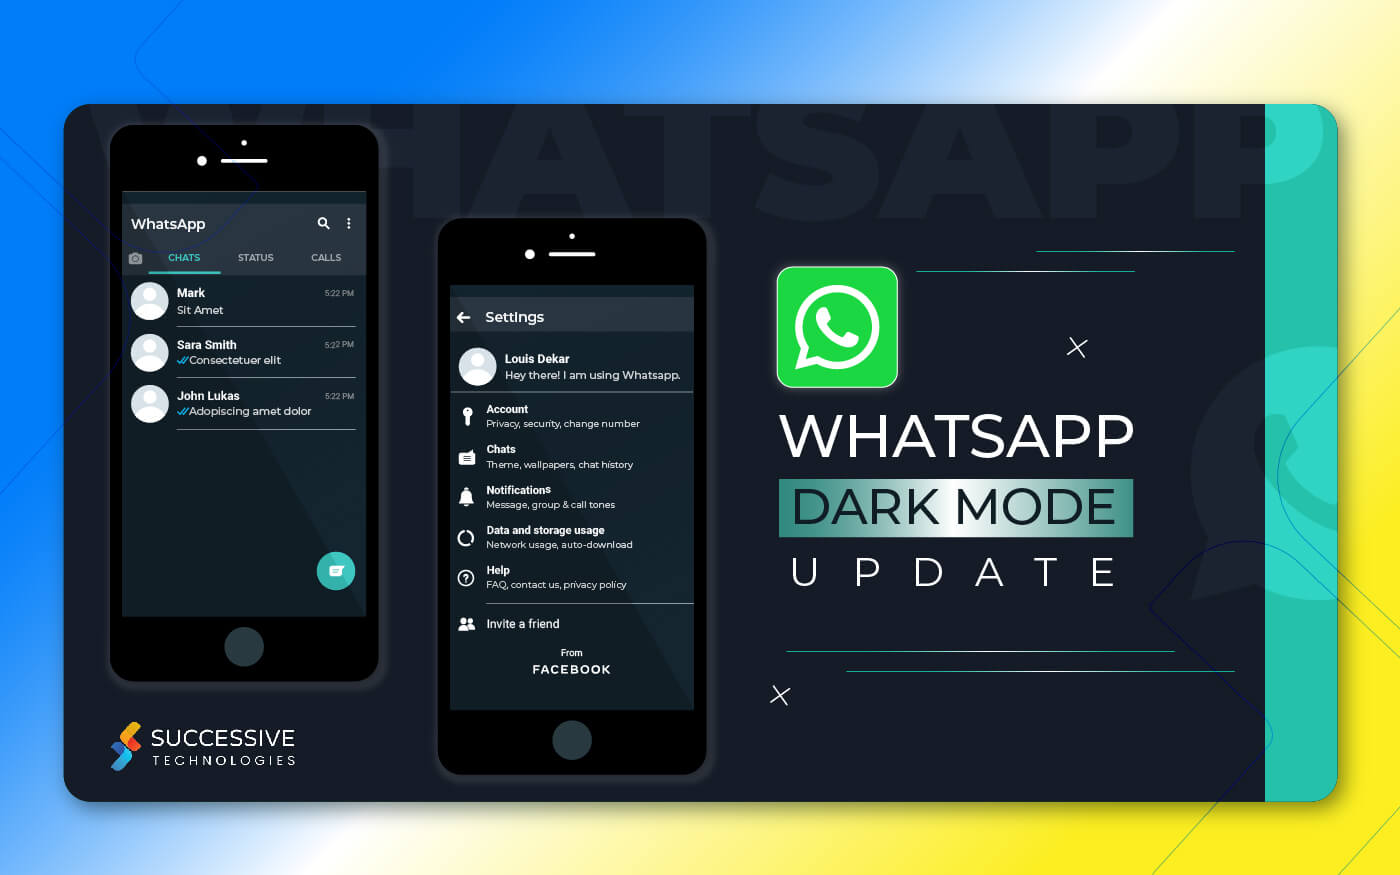 Whatsapp has launched the much-awaited dark mode theme